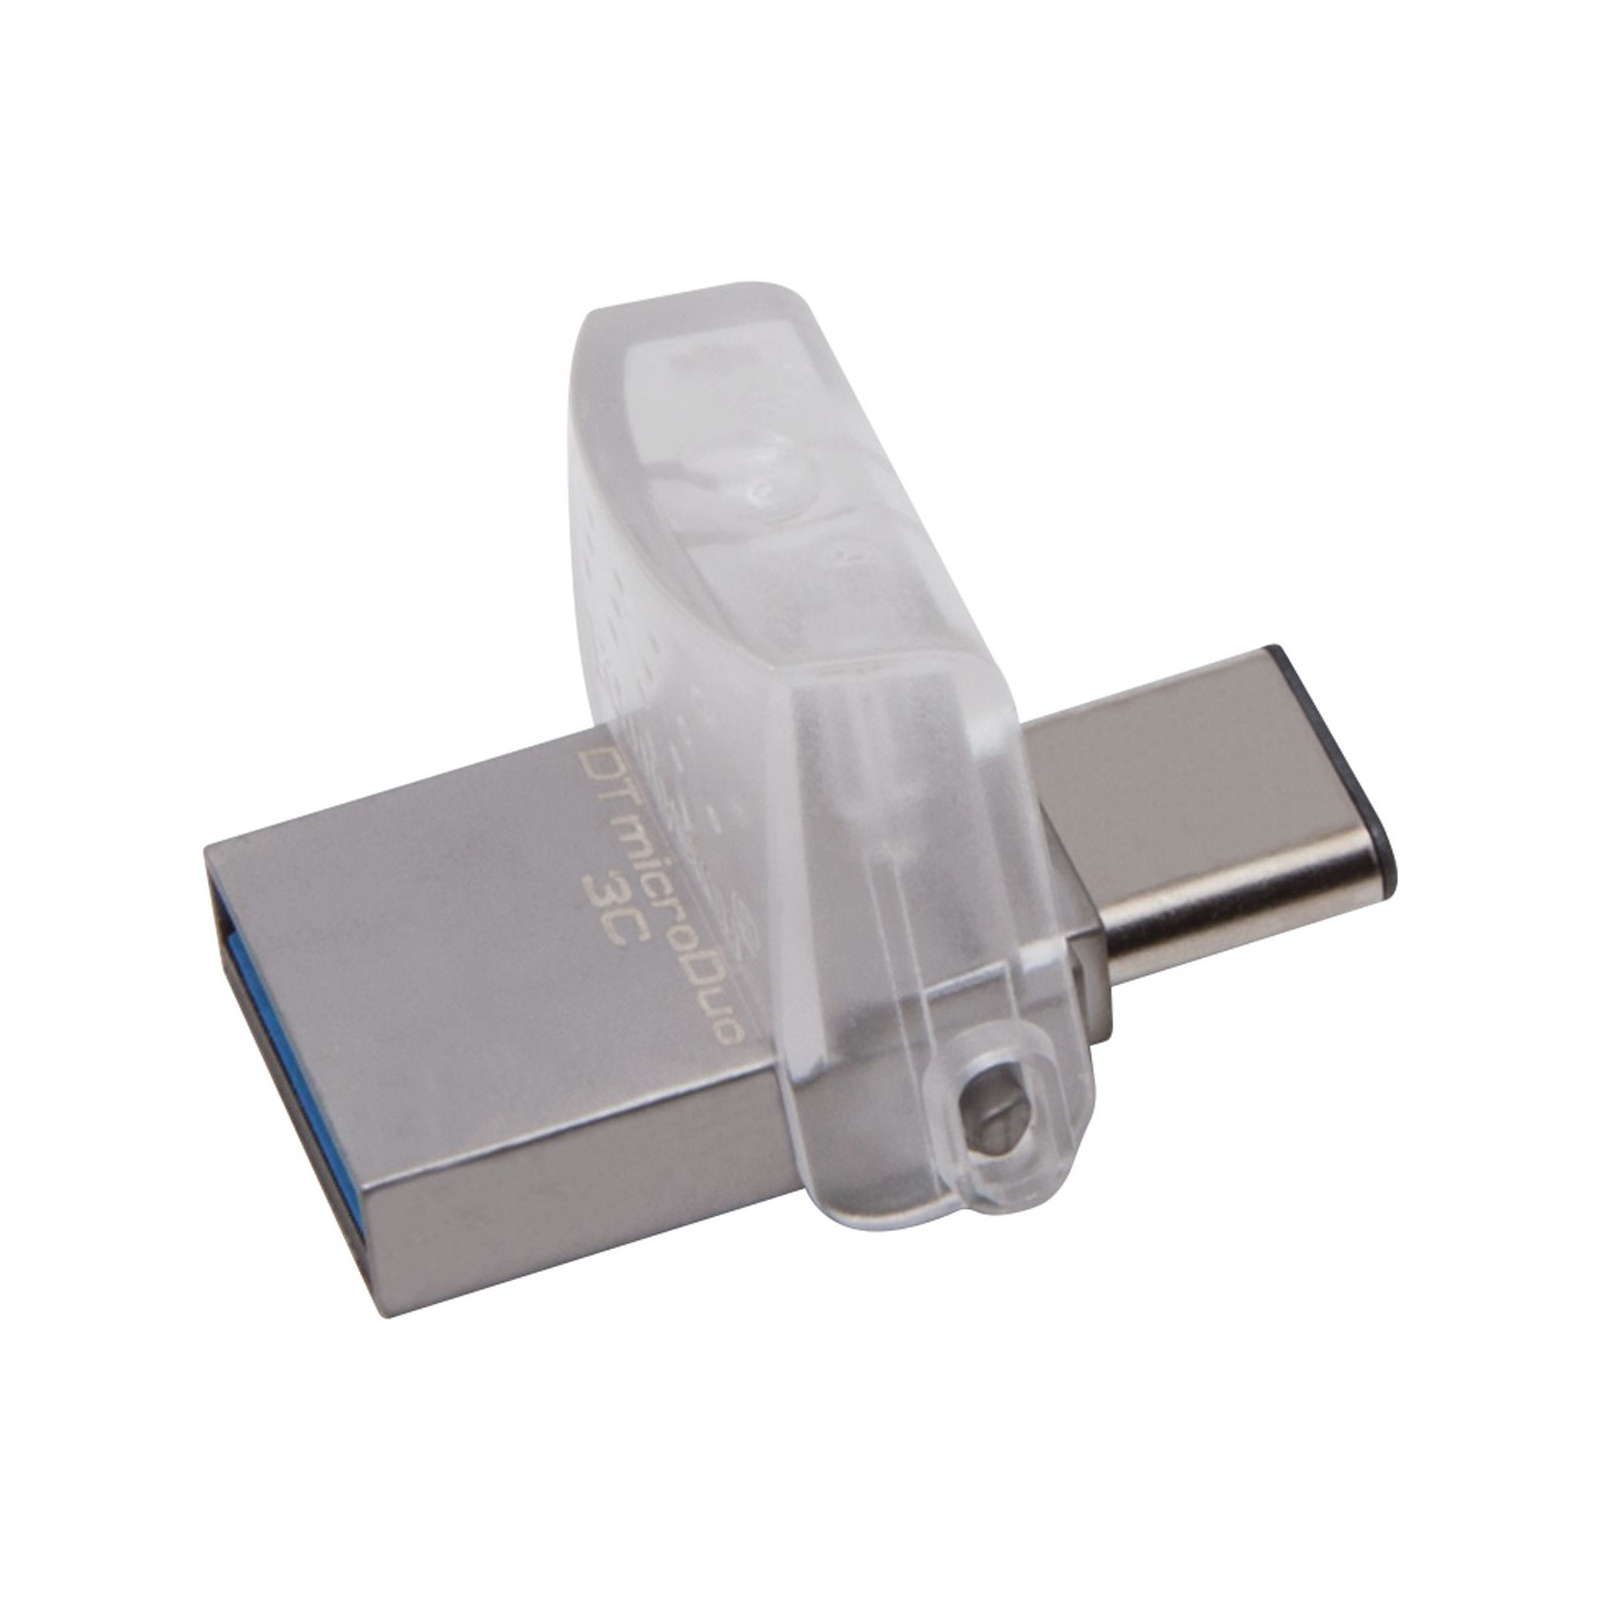 USB флеш накопитель Kingston 64GB DataTraveler microDuo 3C USB 3.1 (DTDUO3C/64GB) изображение 4